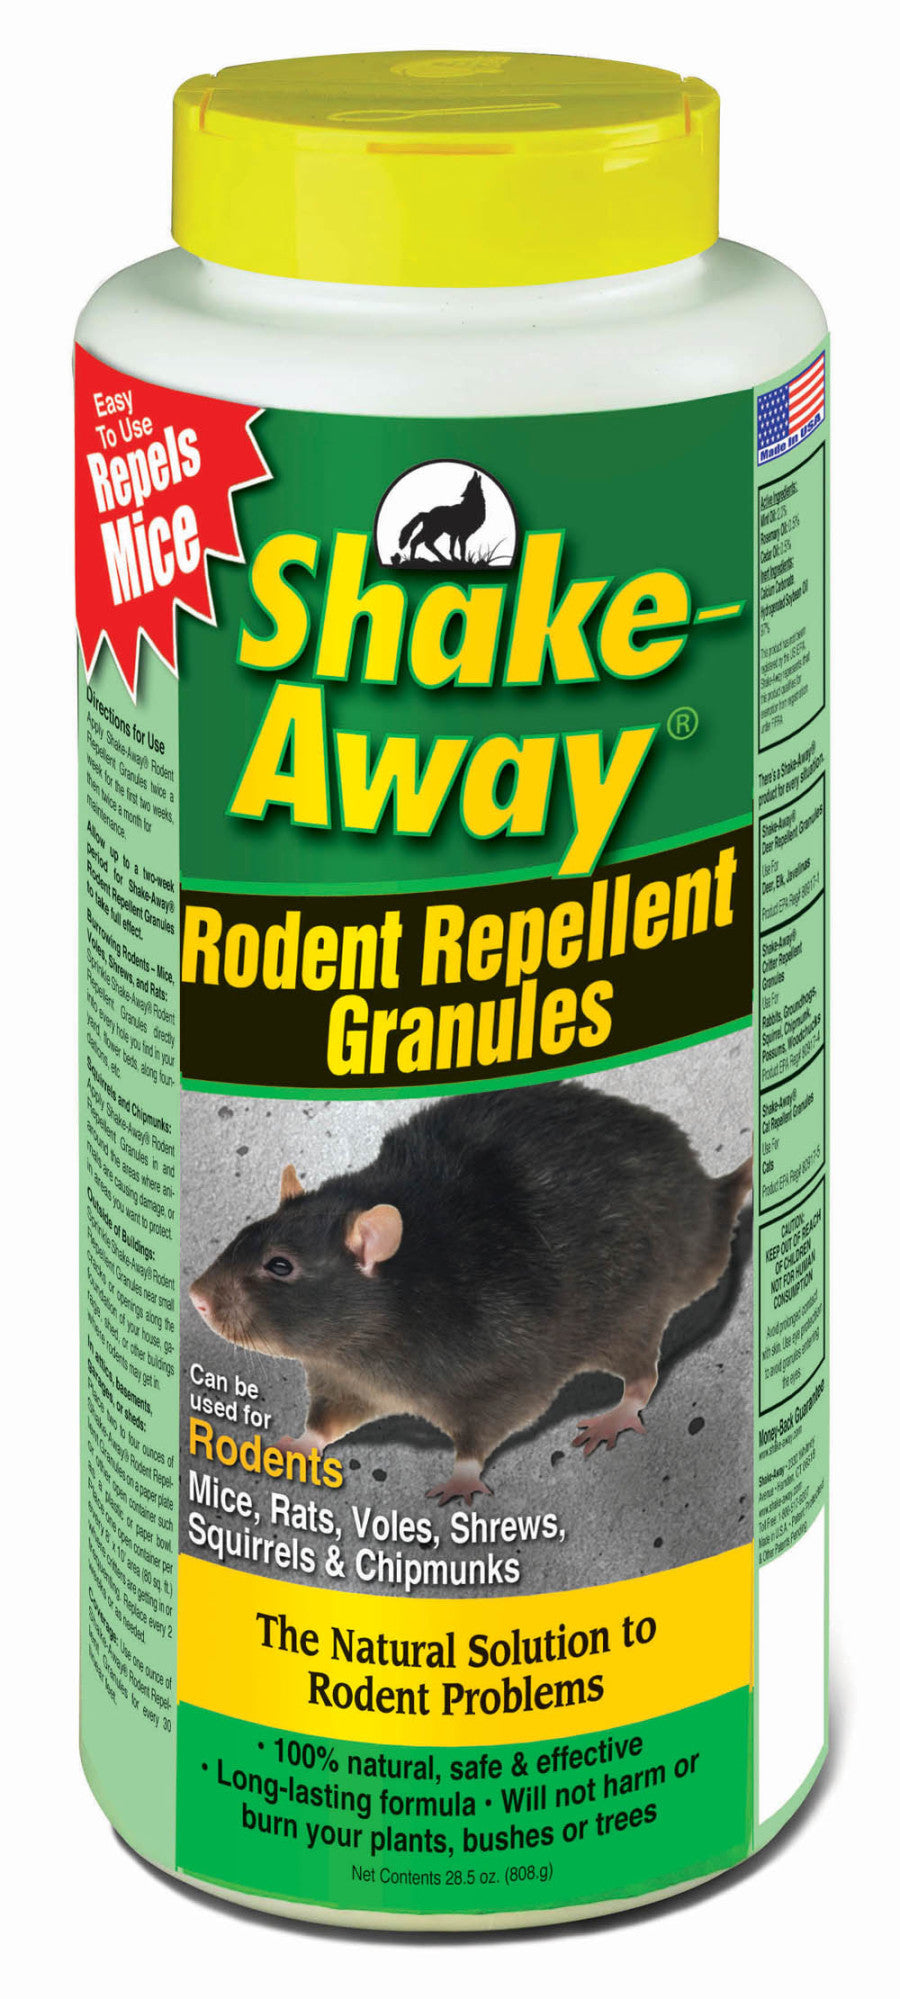 Shake-Away Rodent Repellent Granules Organic 28.5 oz